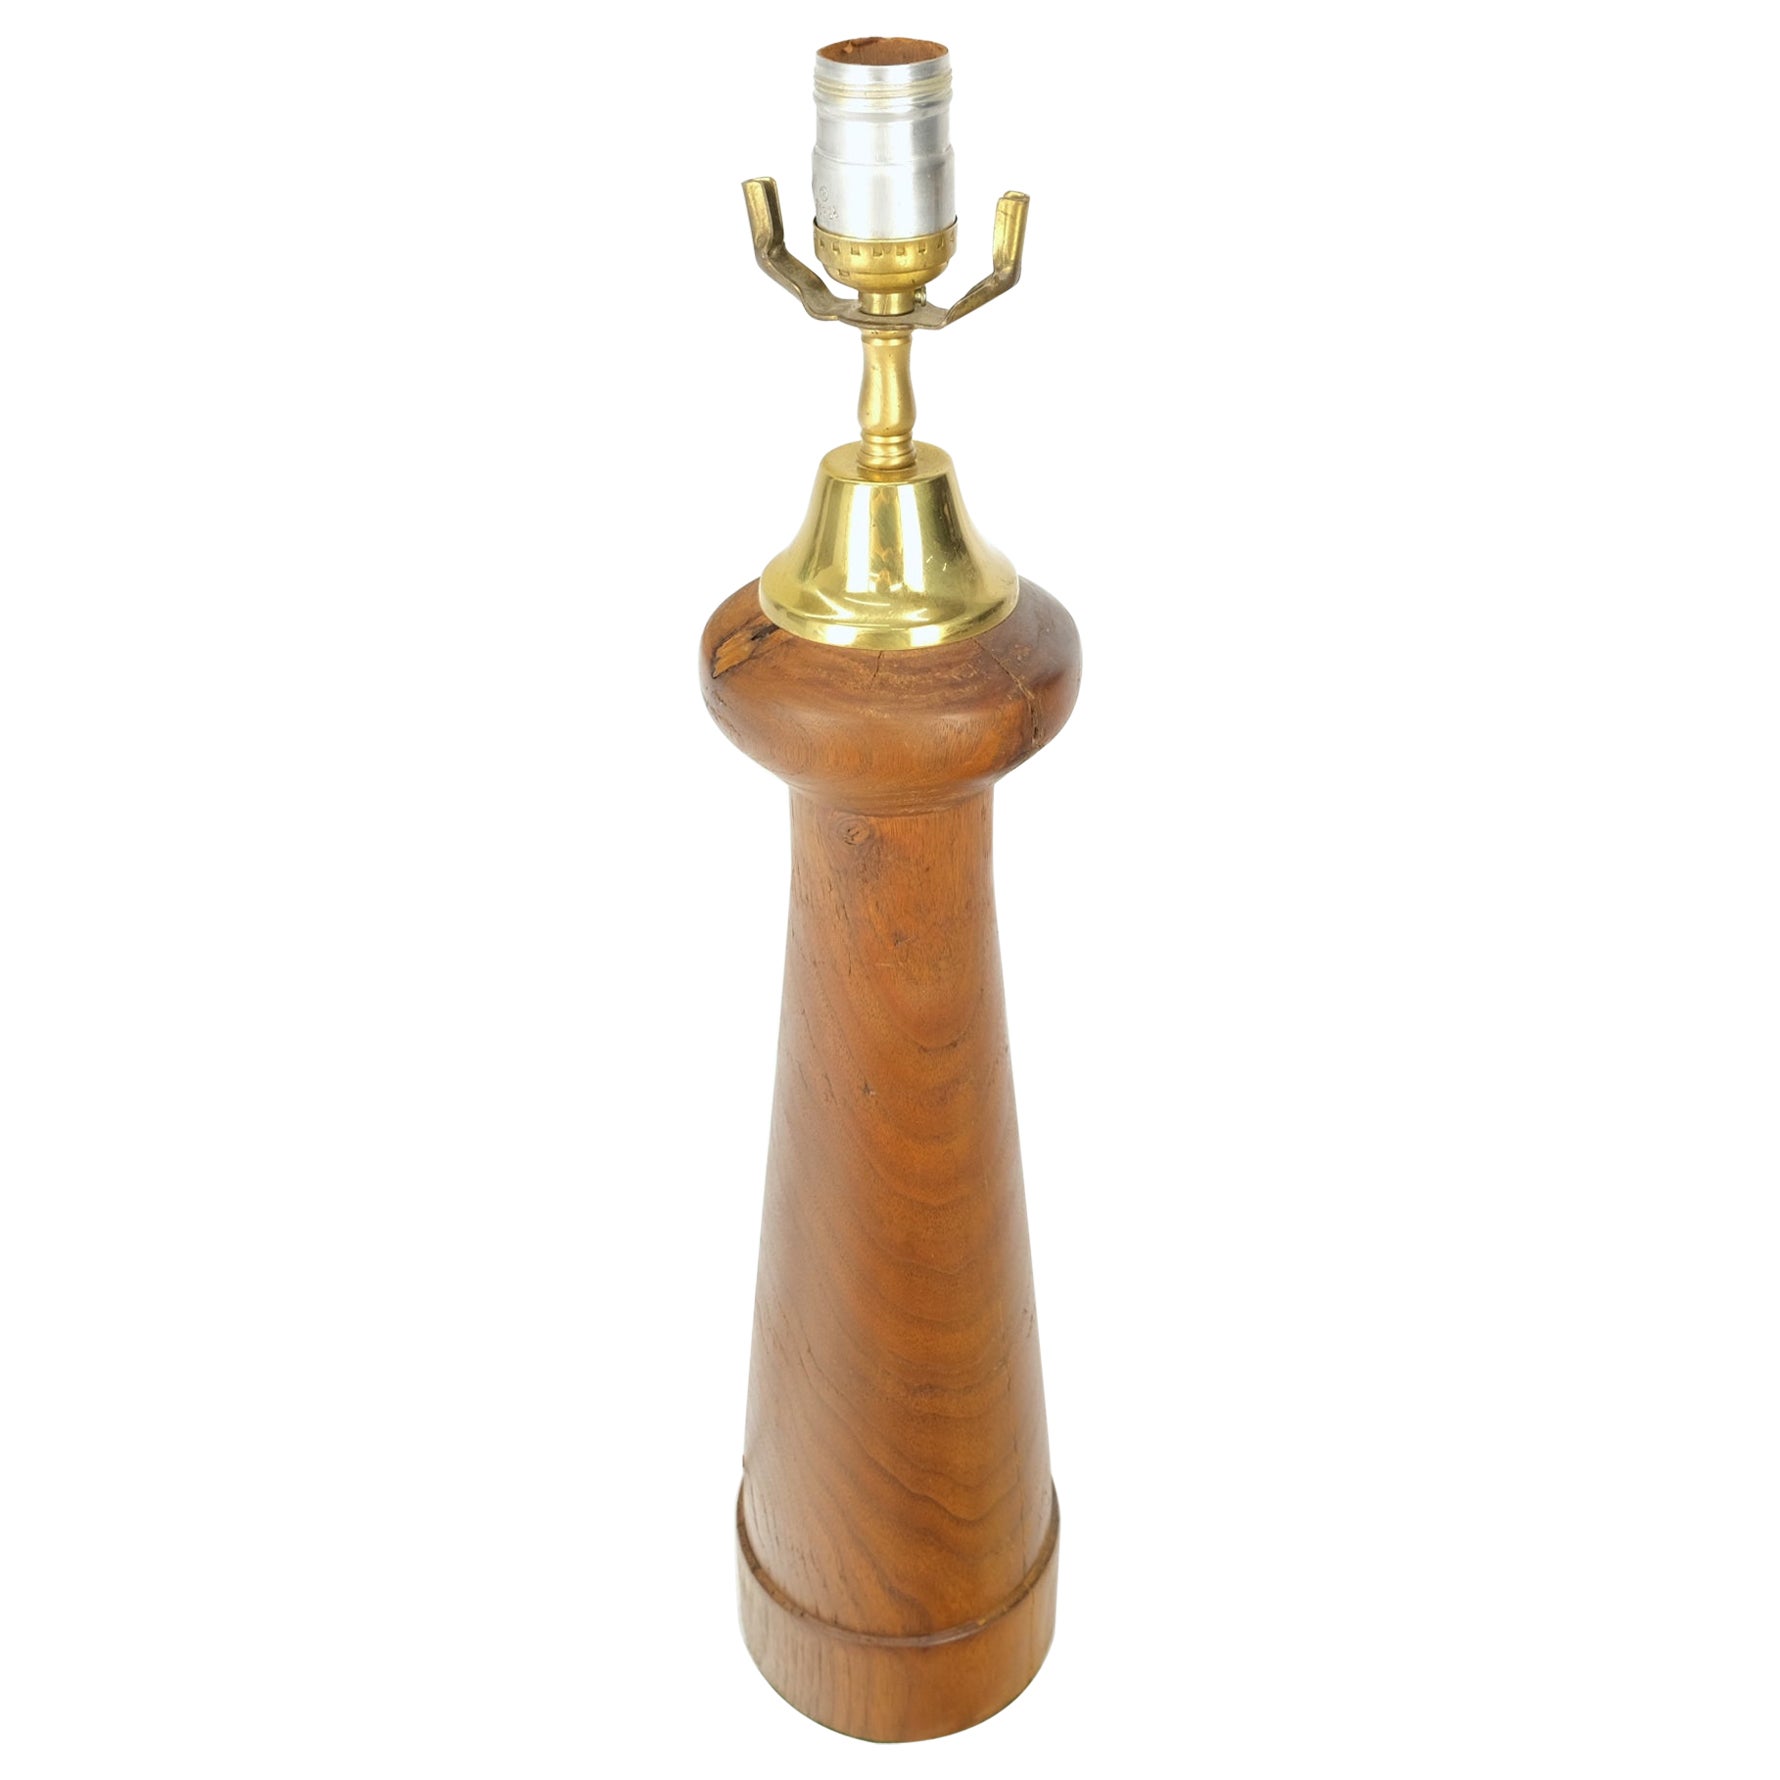 Turned Walnut or Teak Mid-Century Modern Table Lamp, c.1970s For Sale